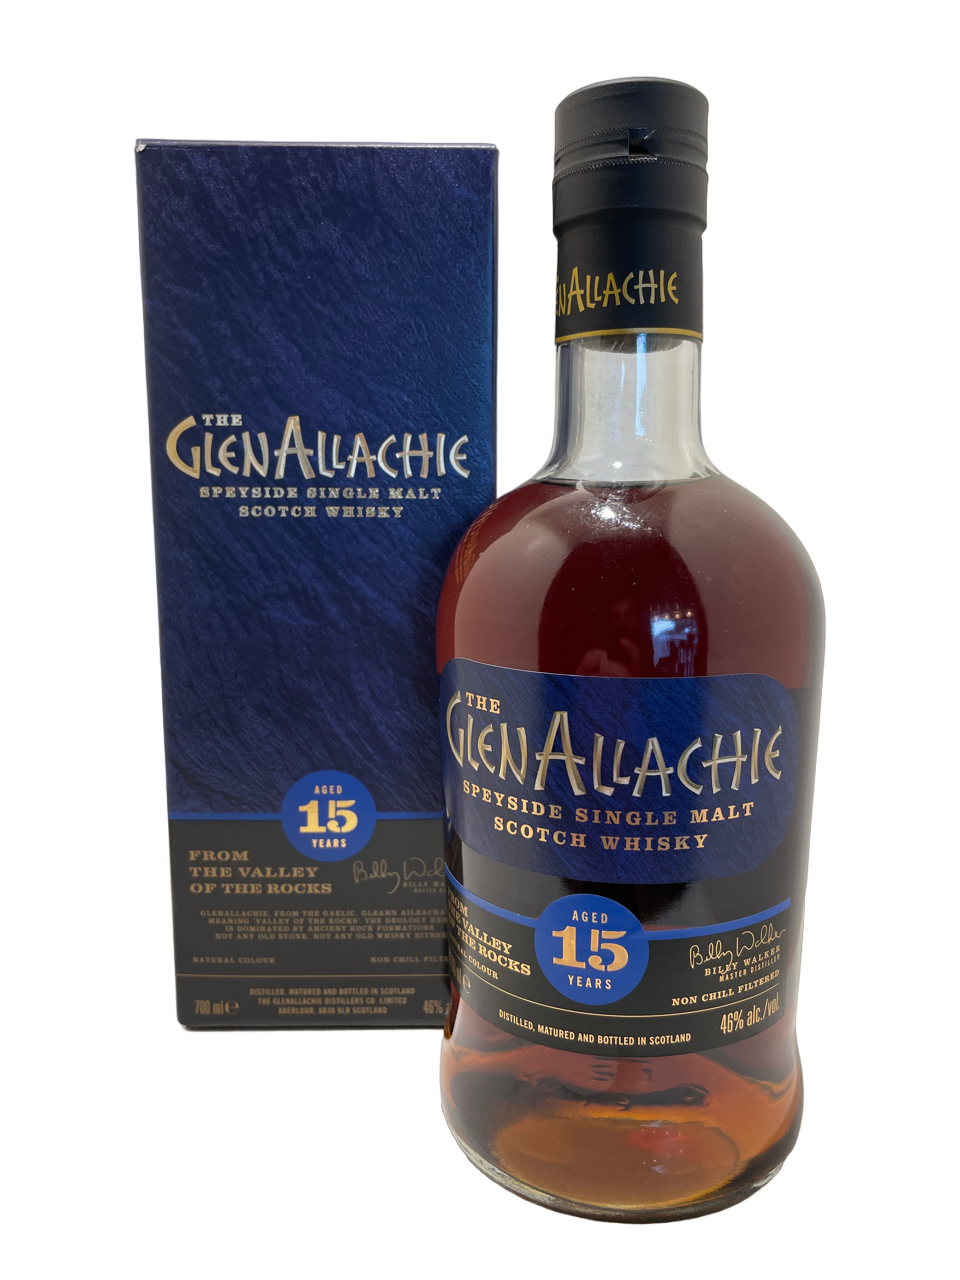 scotch whisky single malt écosse scotish spiritueux spirit speyside billy walker the glenallachie 15 years old